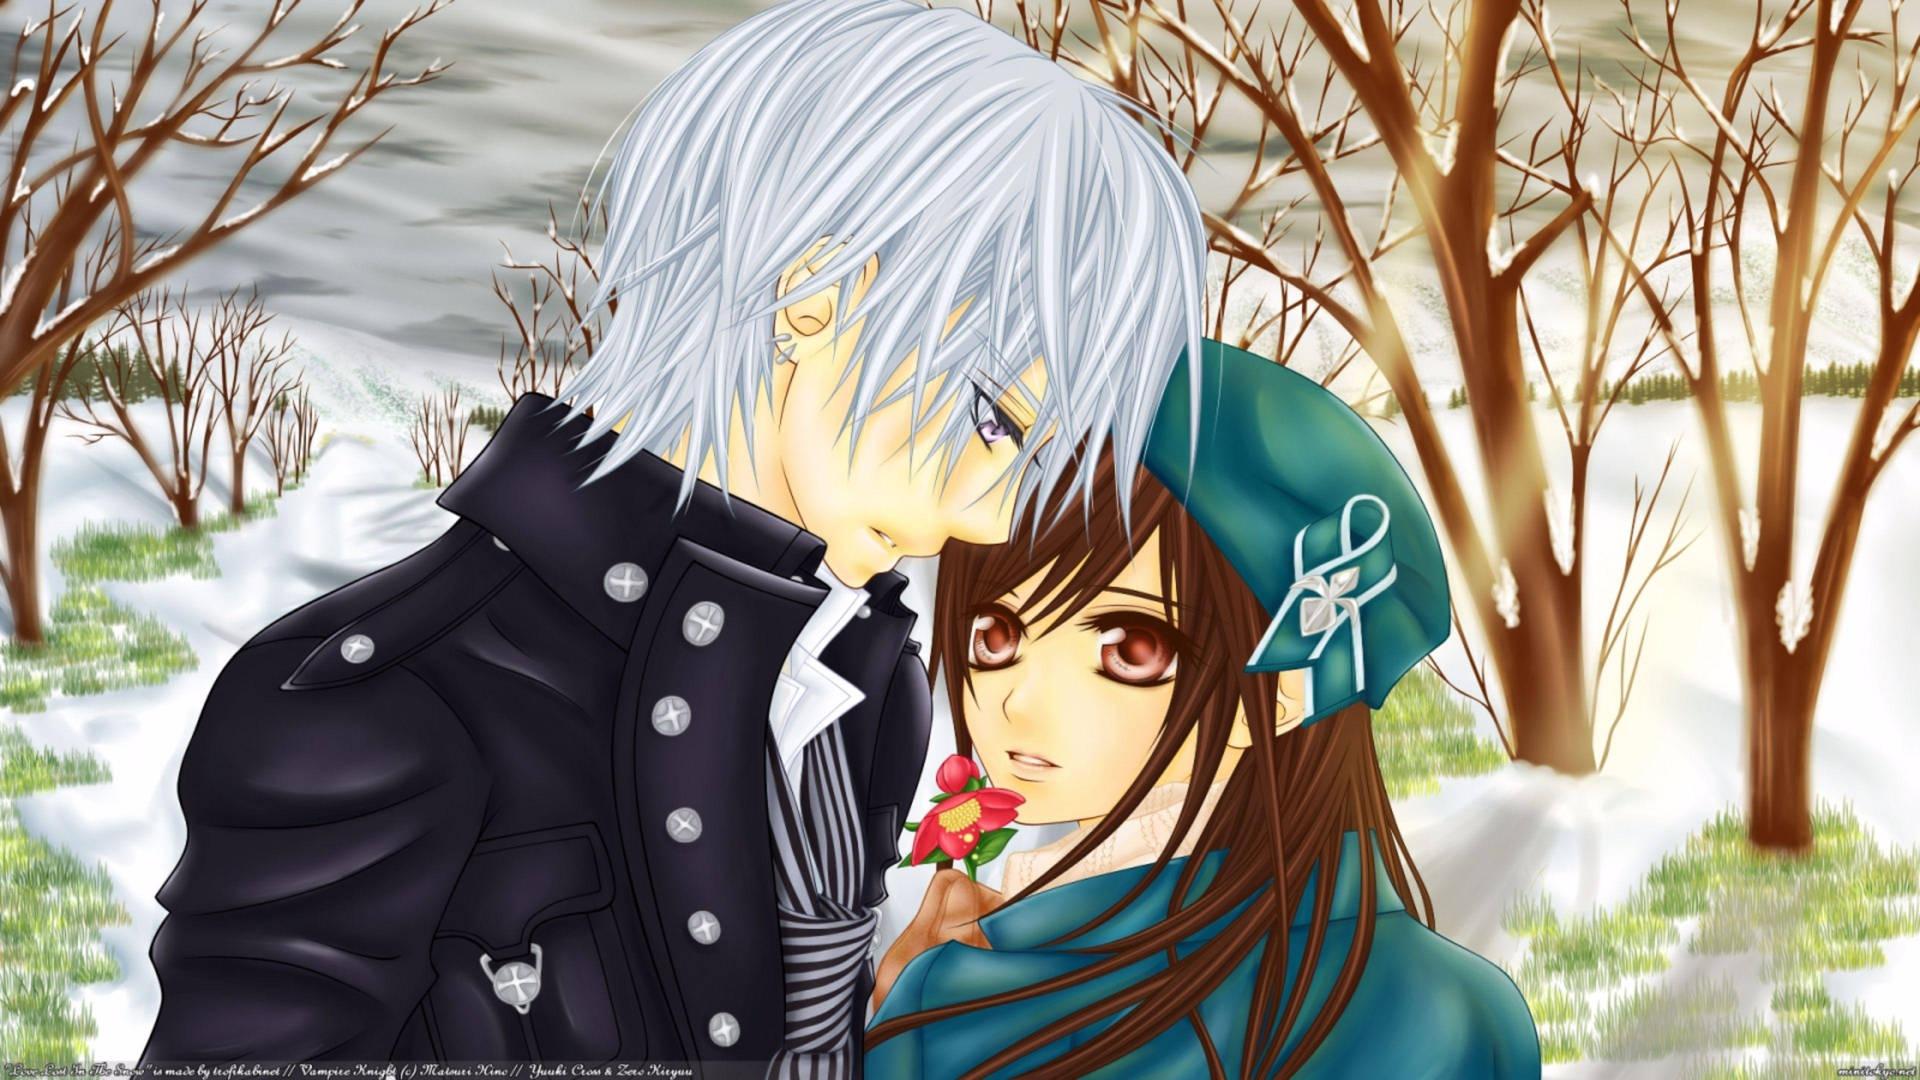 Caption: Romantic Anime Couple Embracing in the Fall Season Wallpaper